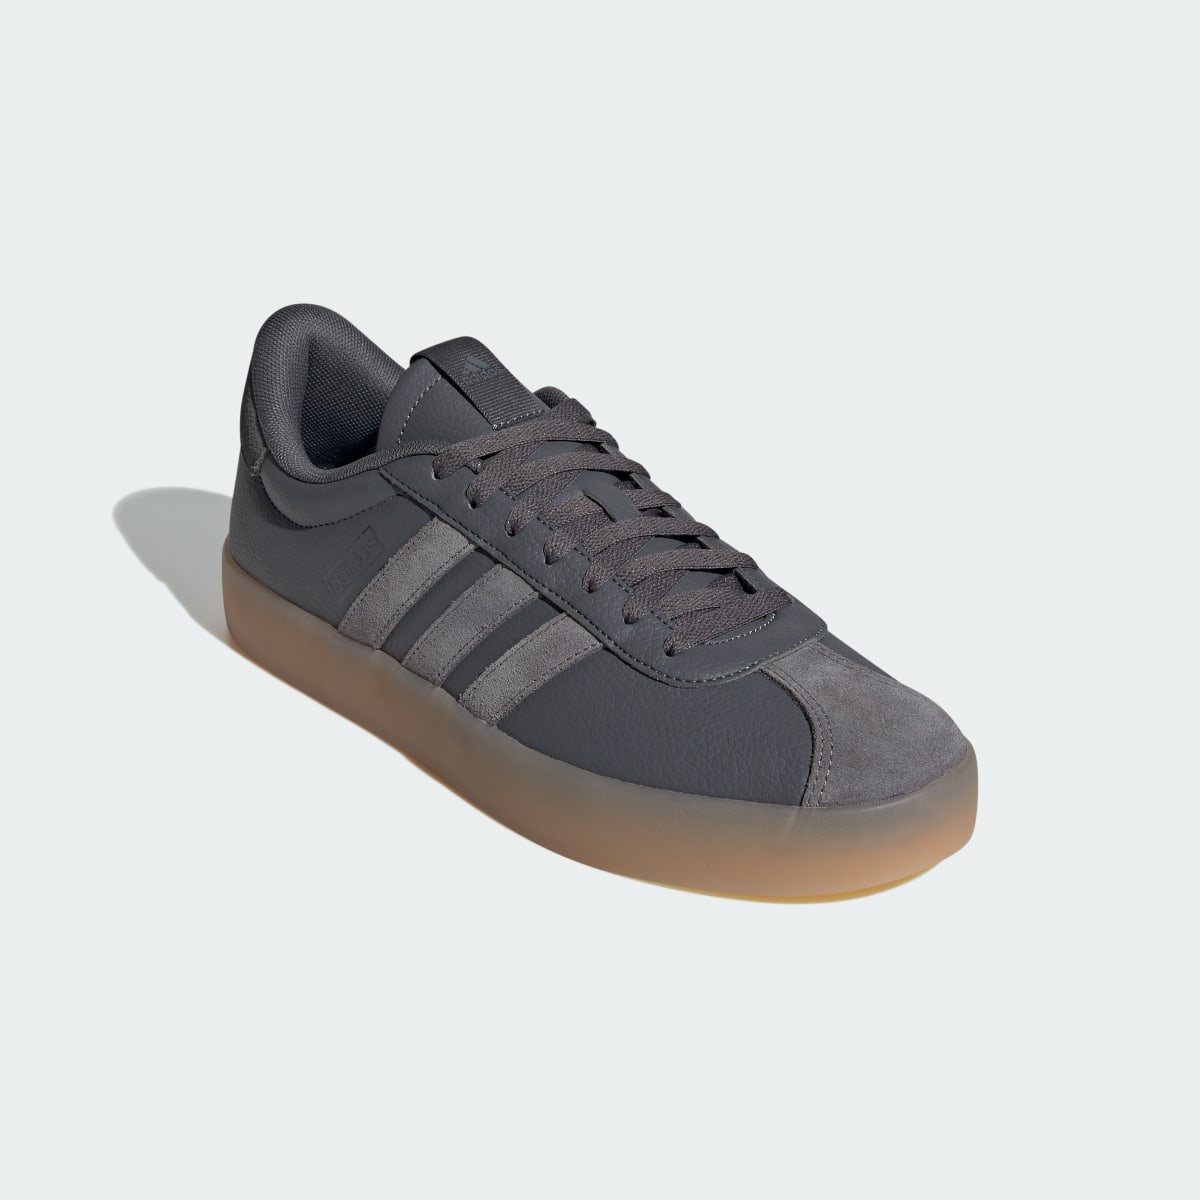 Adidas VL Court 3.0 Shoes. 5